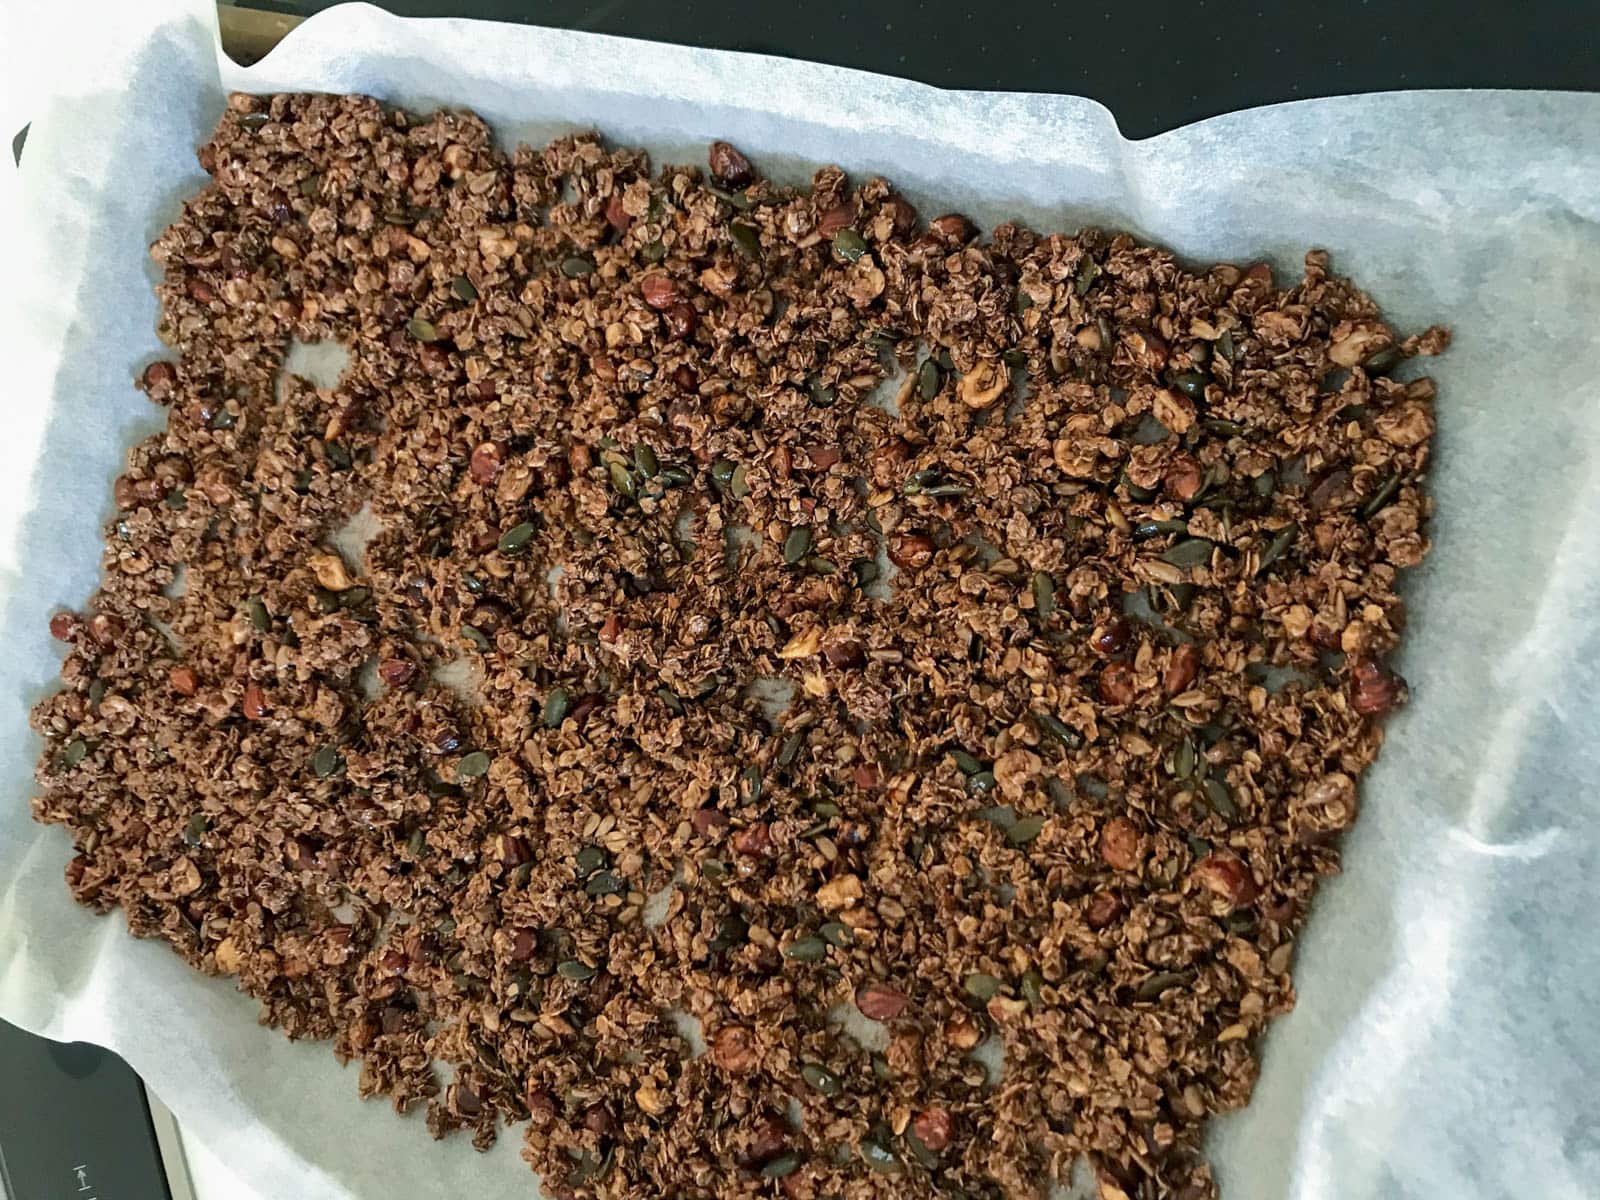 Chocolate hazelnut granola on a tray ready to bake